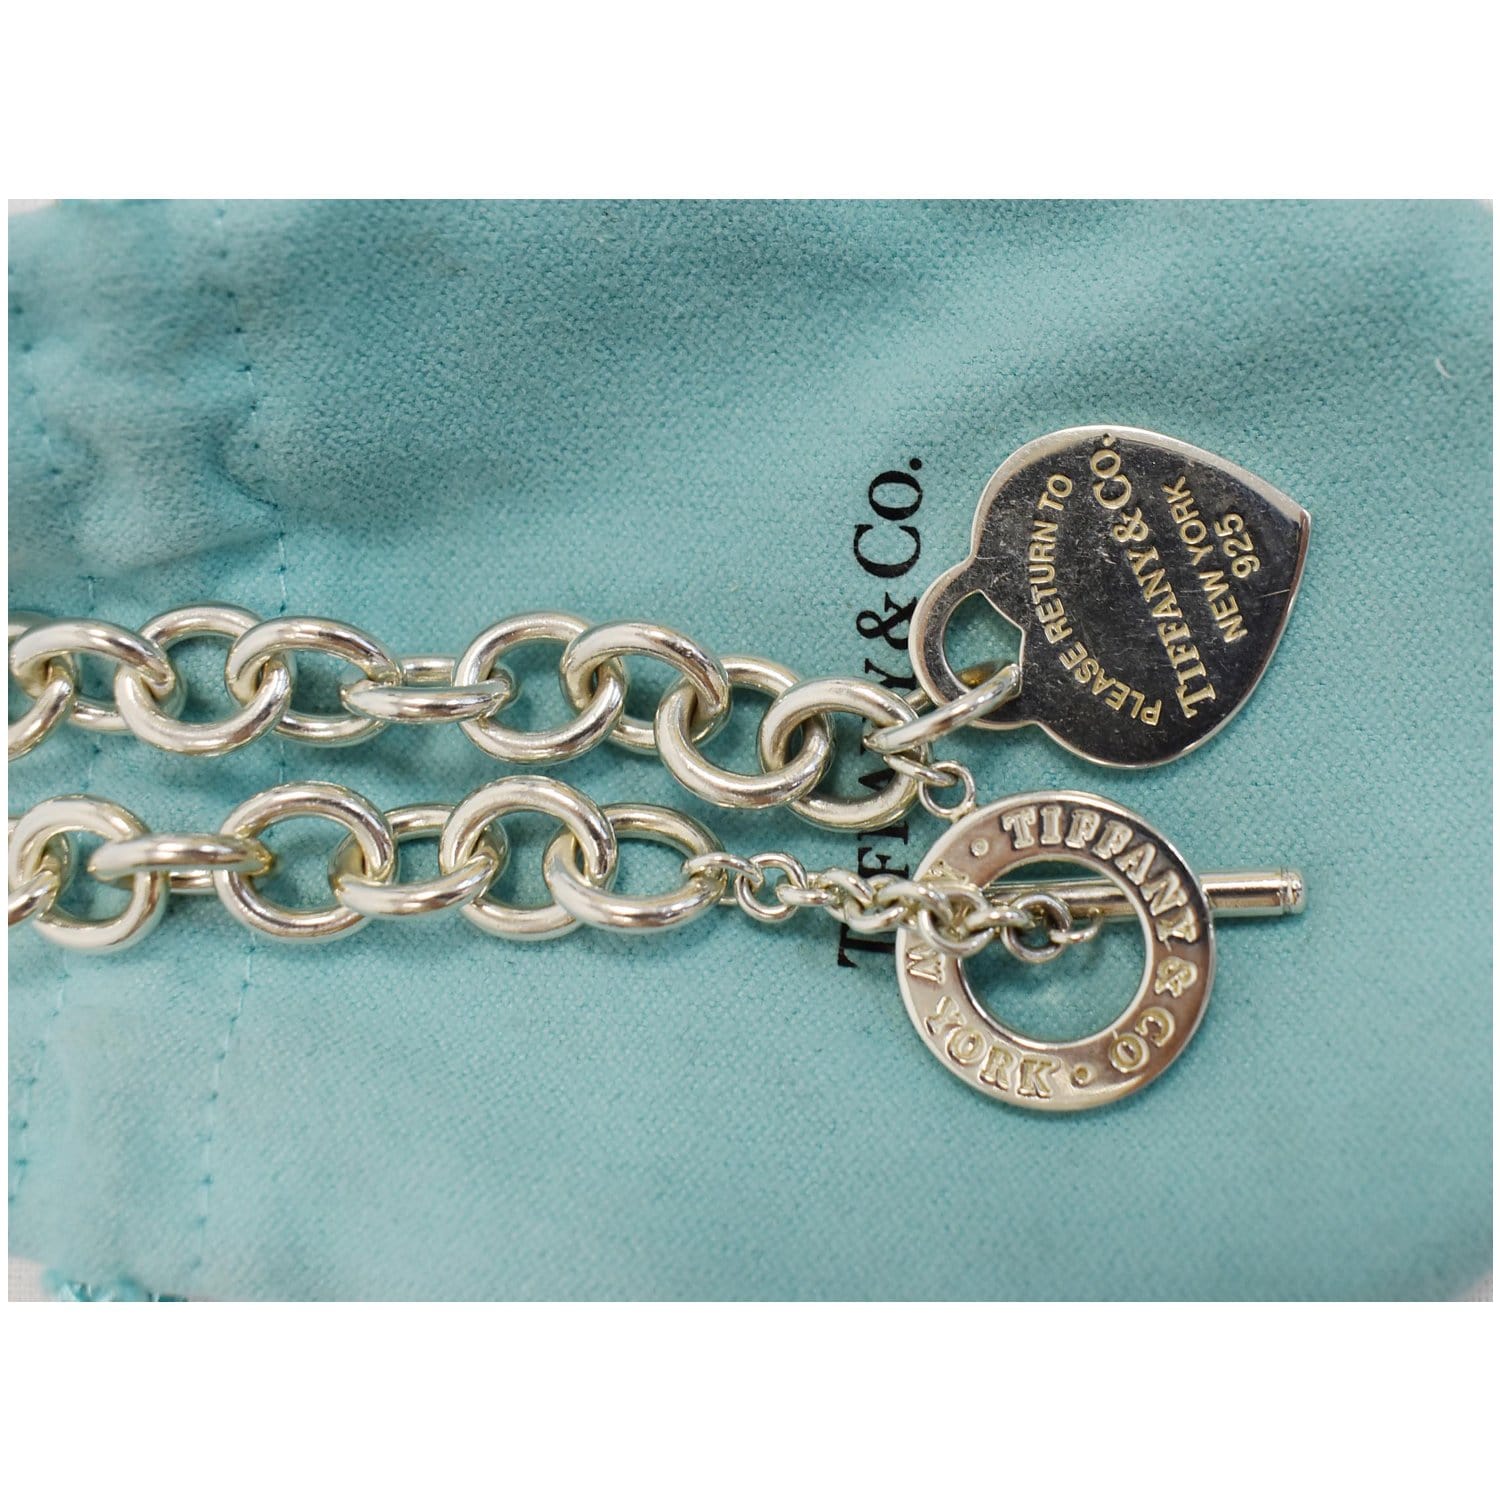 Tiffany & Co. Return To Tiffany Heart Tag Silver Chain Link Toggle Necklace  Tiffany & Co.